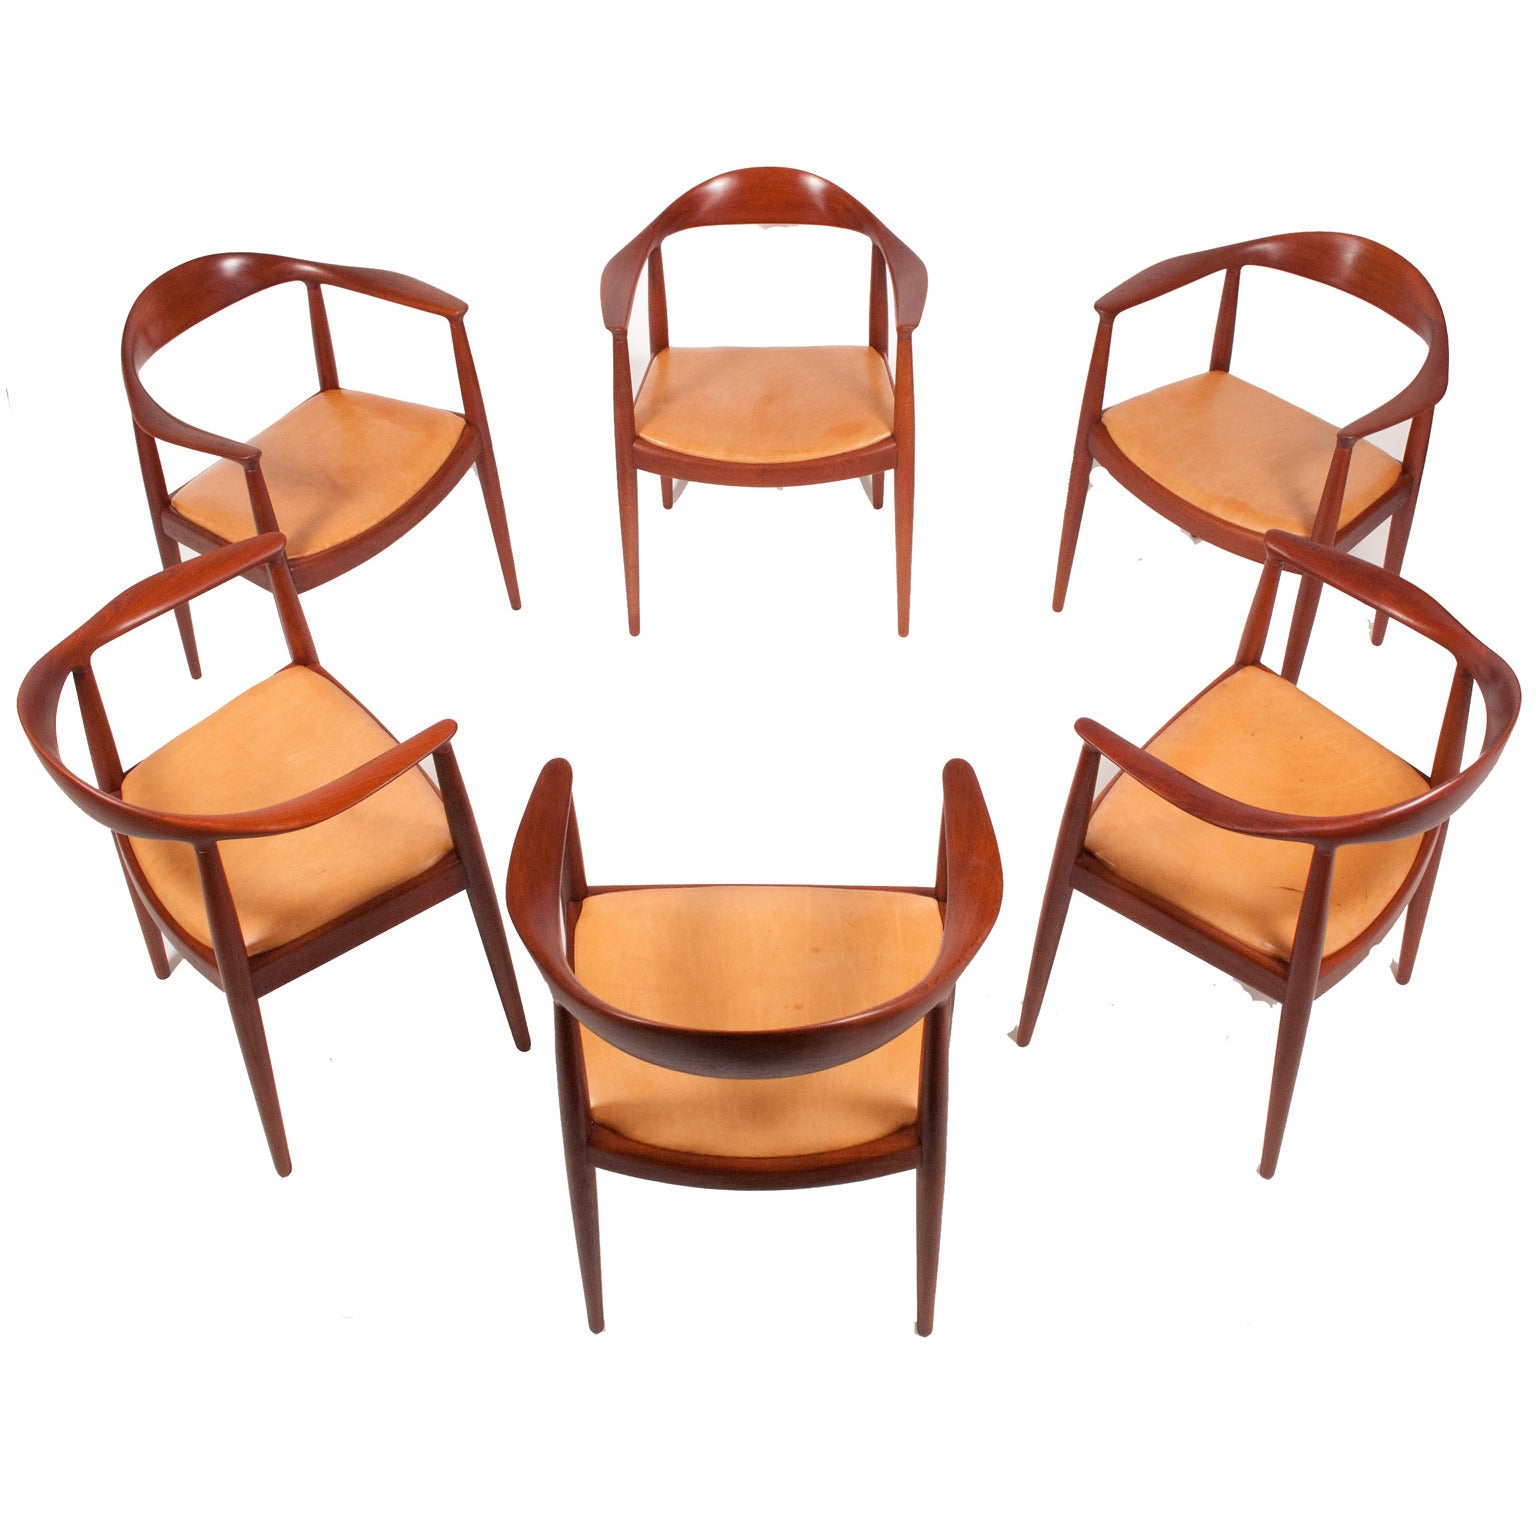 Set of Six "Round" Chairs by Hans J. Wegner for Johannes Hansen